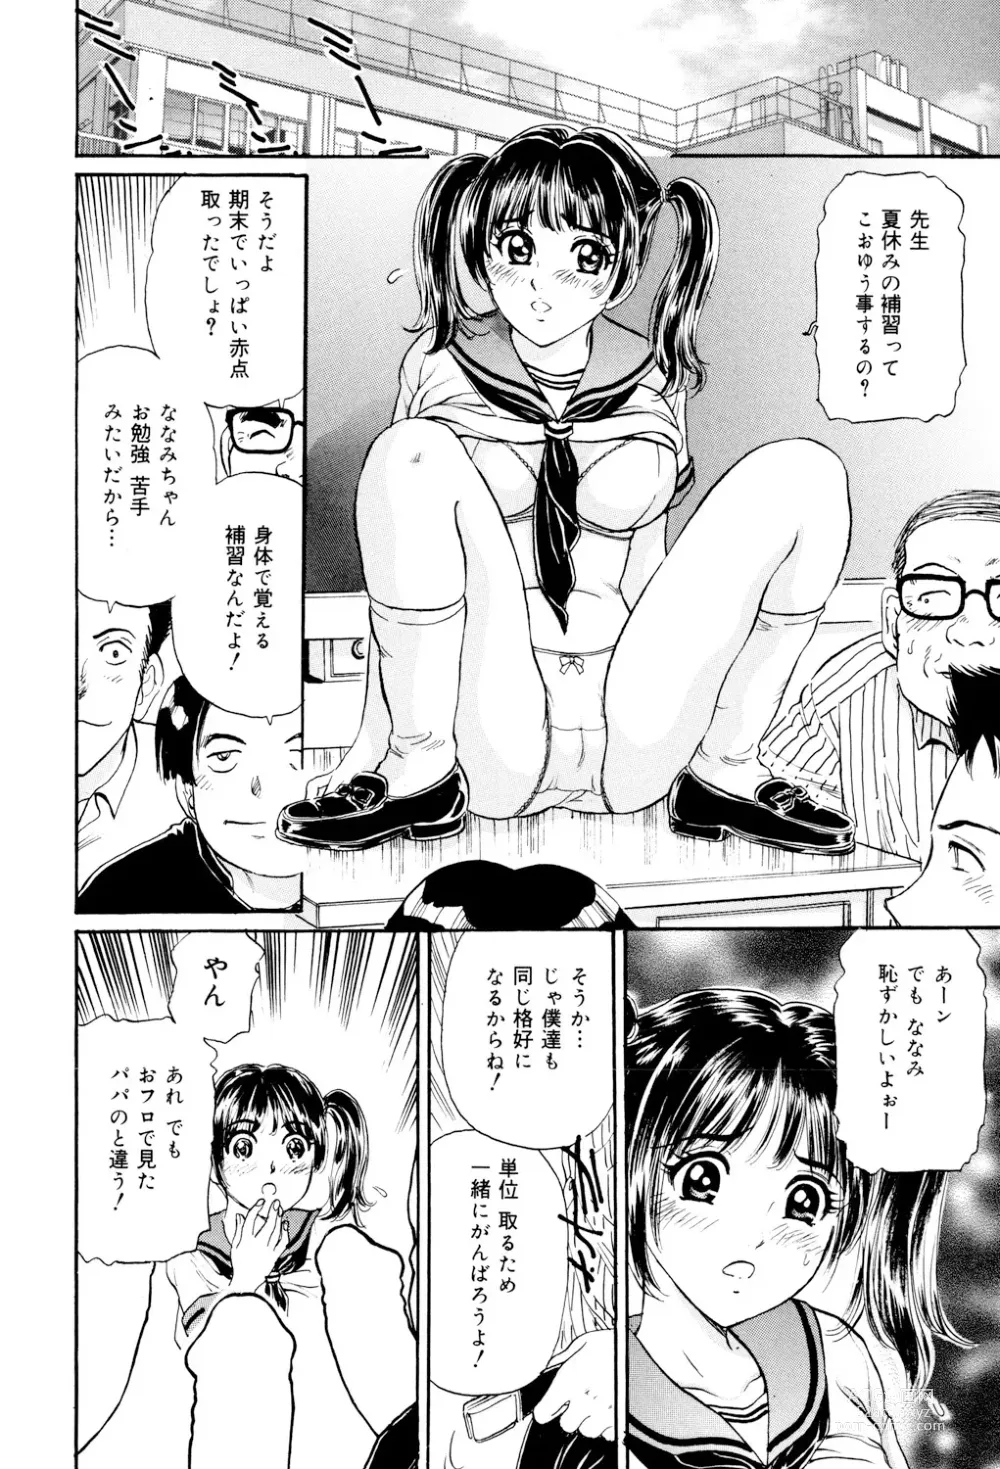 Page 147 of manga Mecha Mote Furin